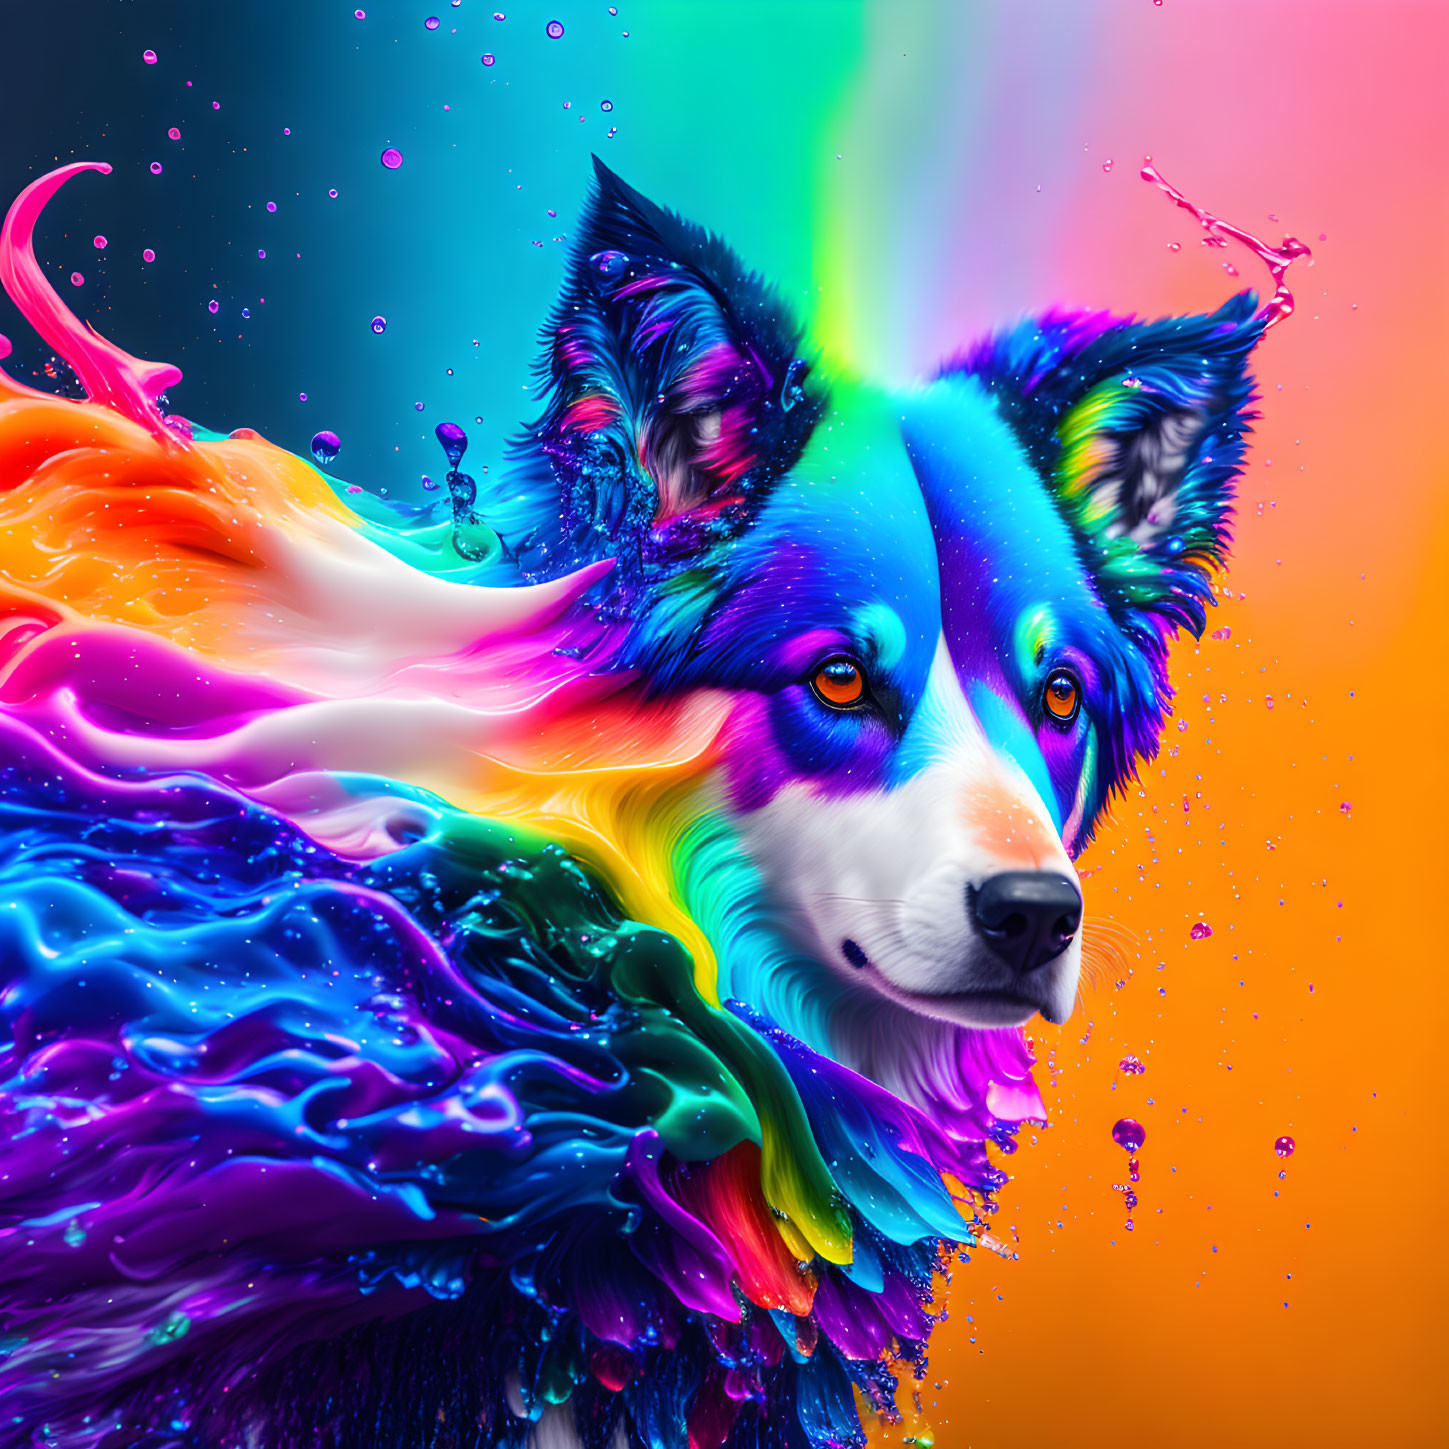 Colorful Rainbow Dog Artwork on Bright Background